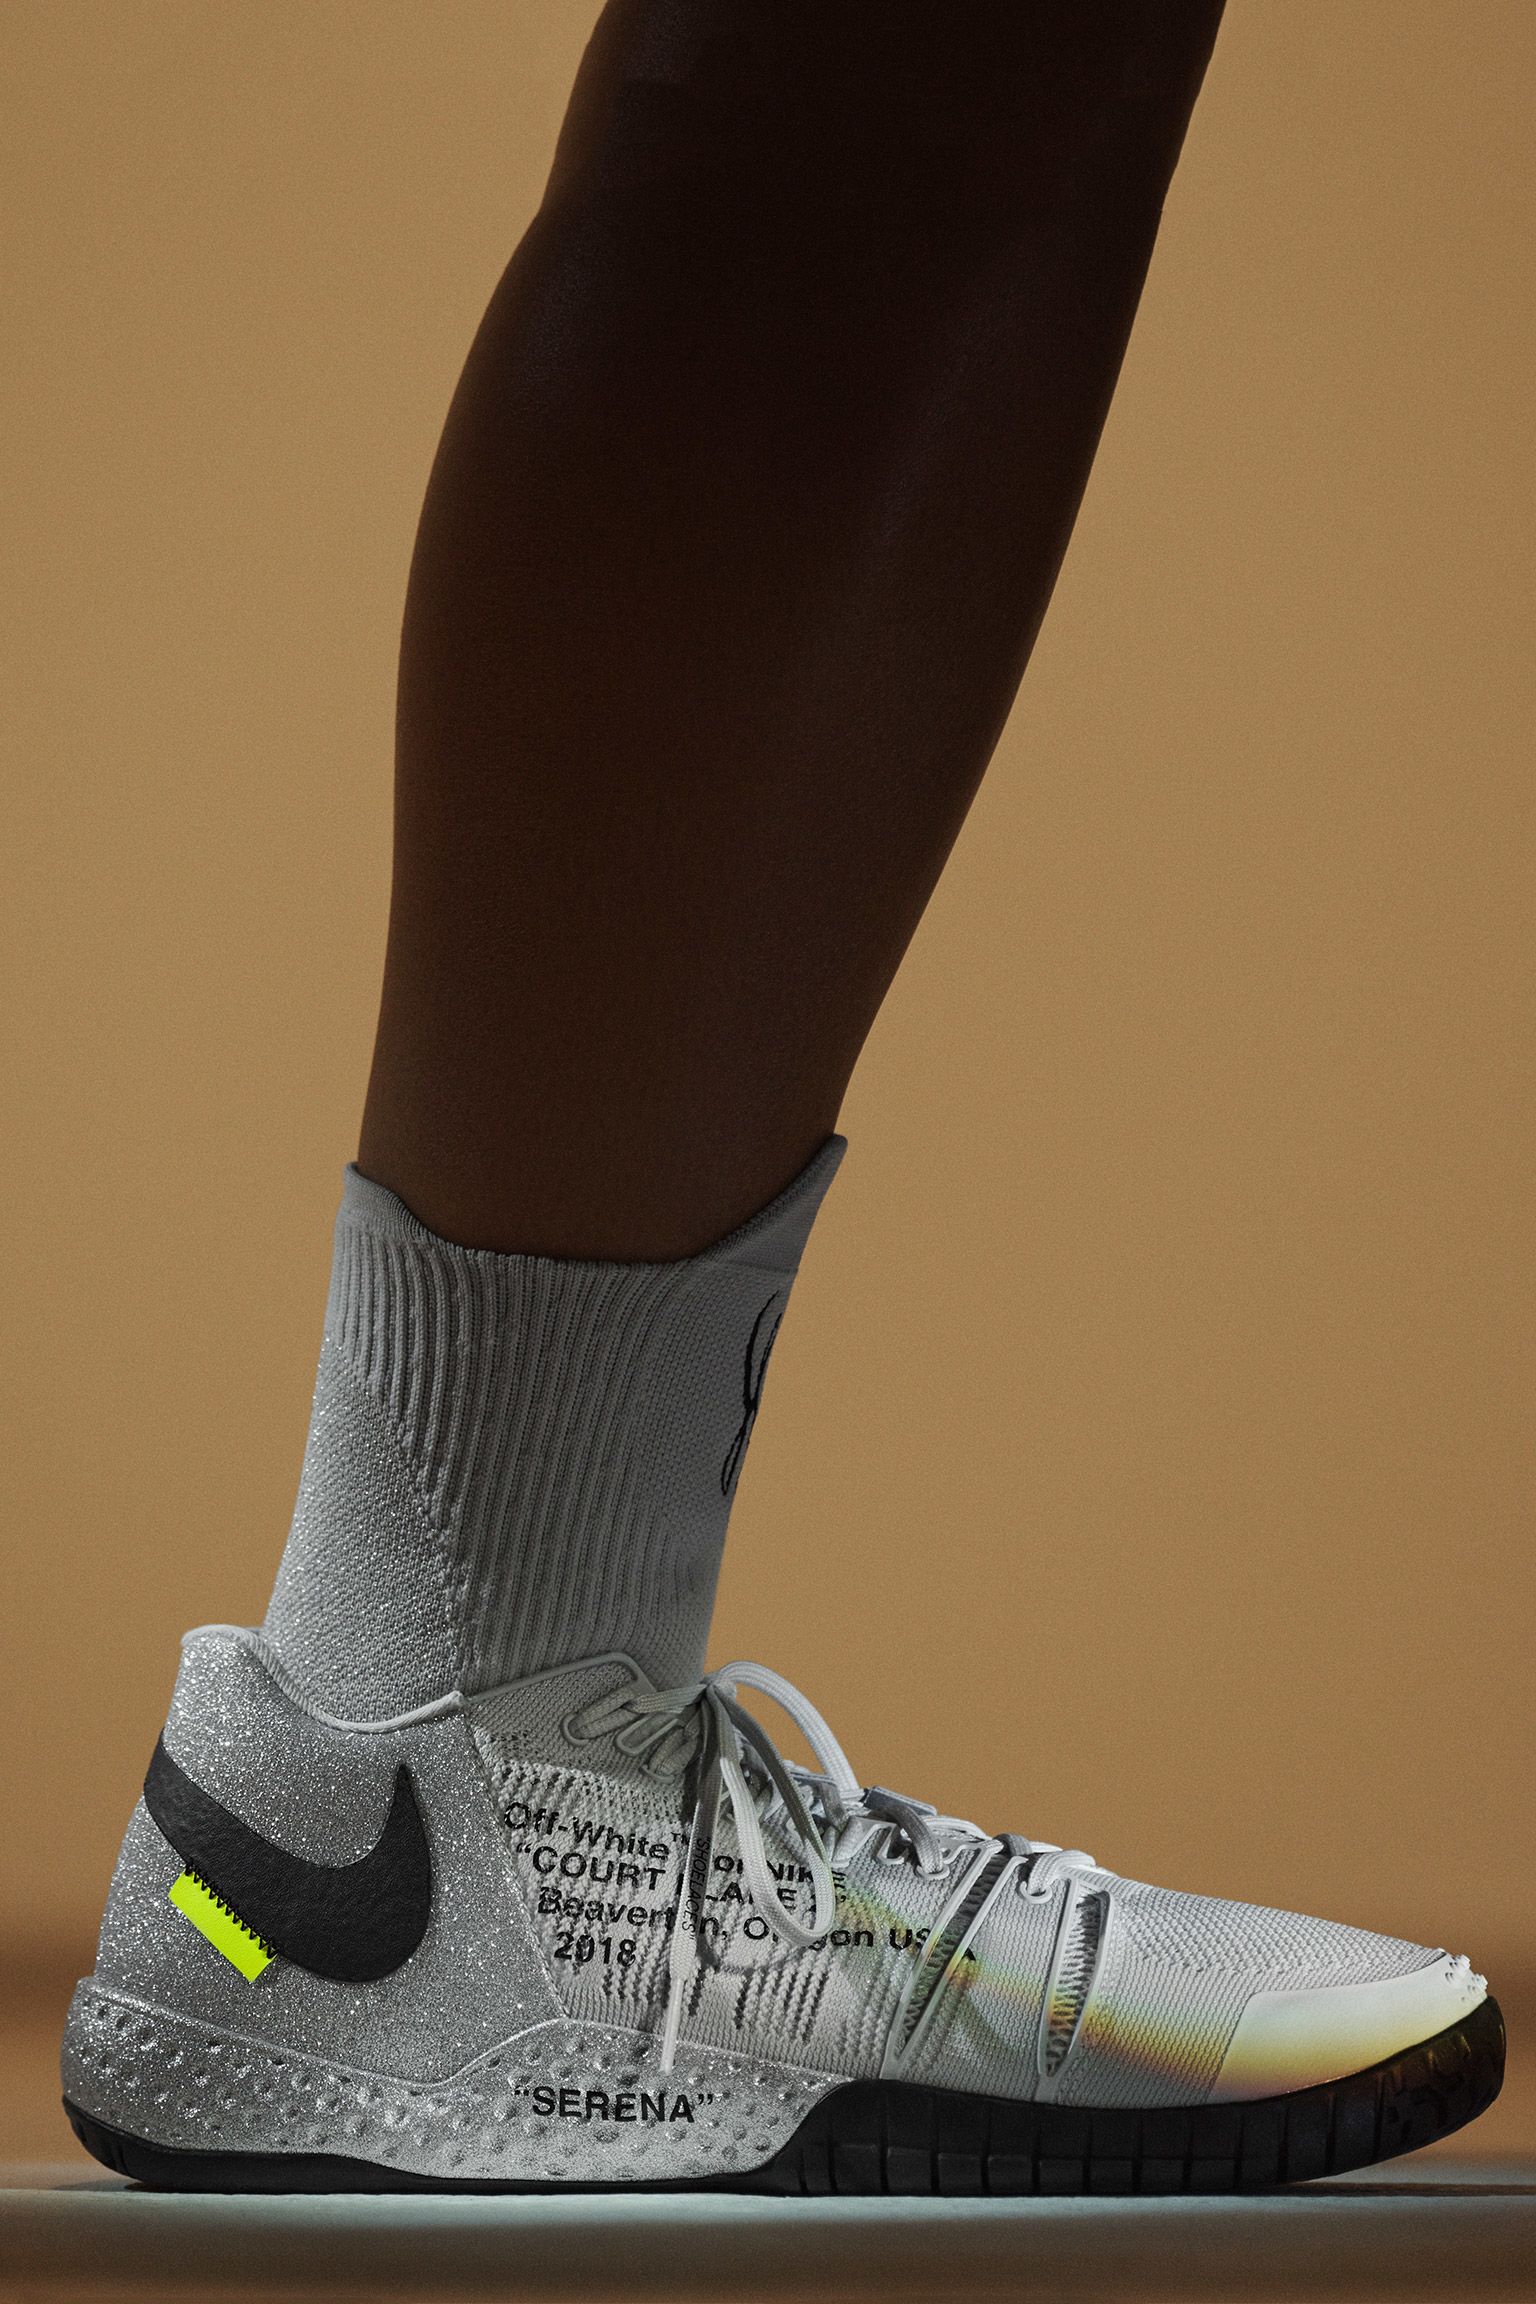 Louis Vuitton x Nike Air Force 1s by Virgil Abloh, Serena Williams